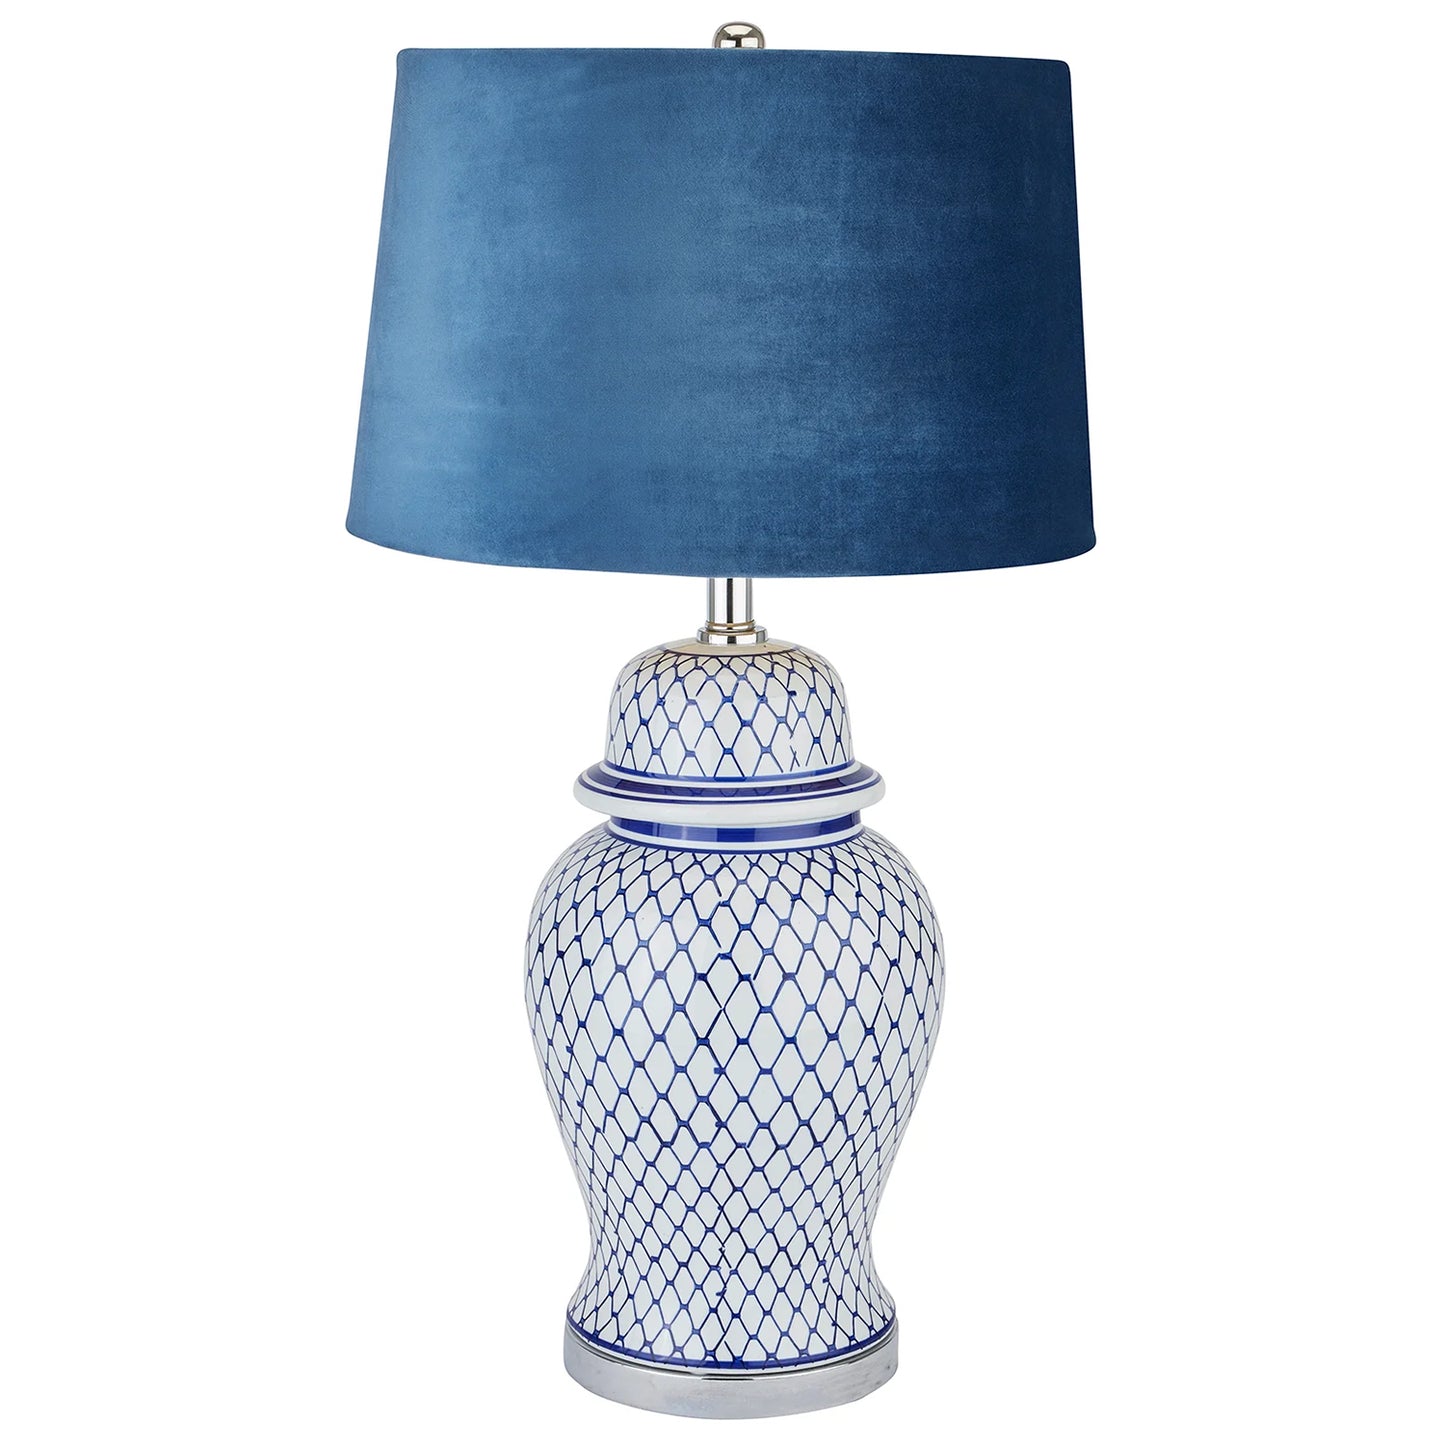 Malabar blue and white ceramic lamp